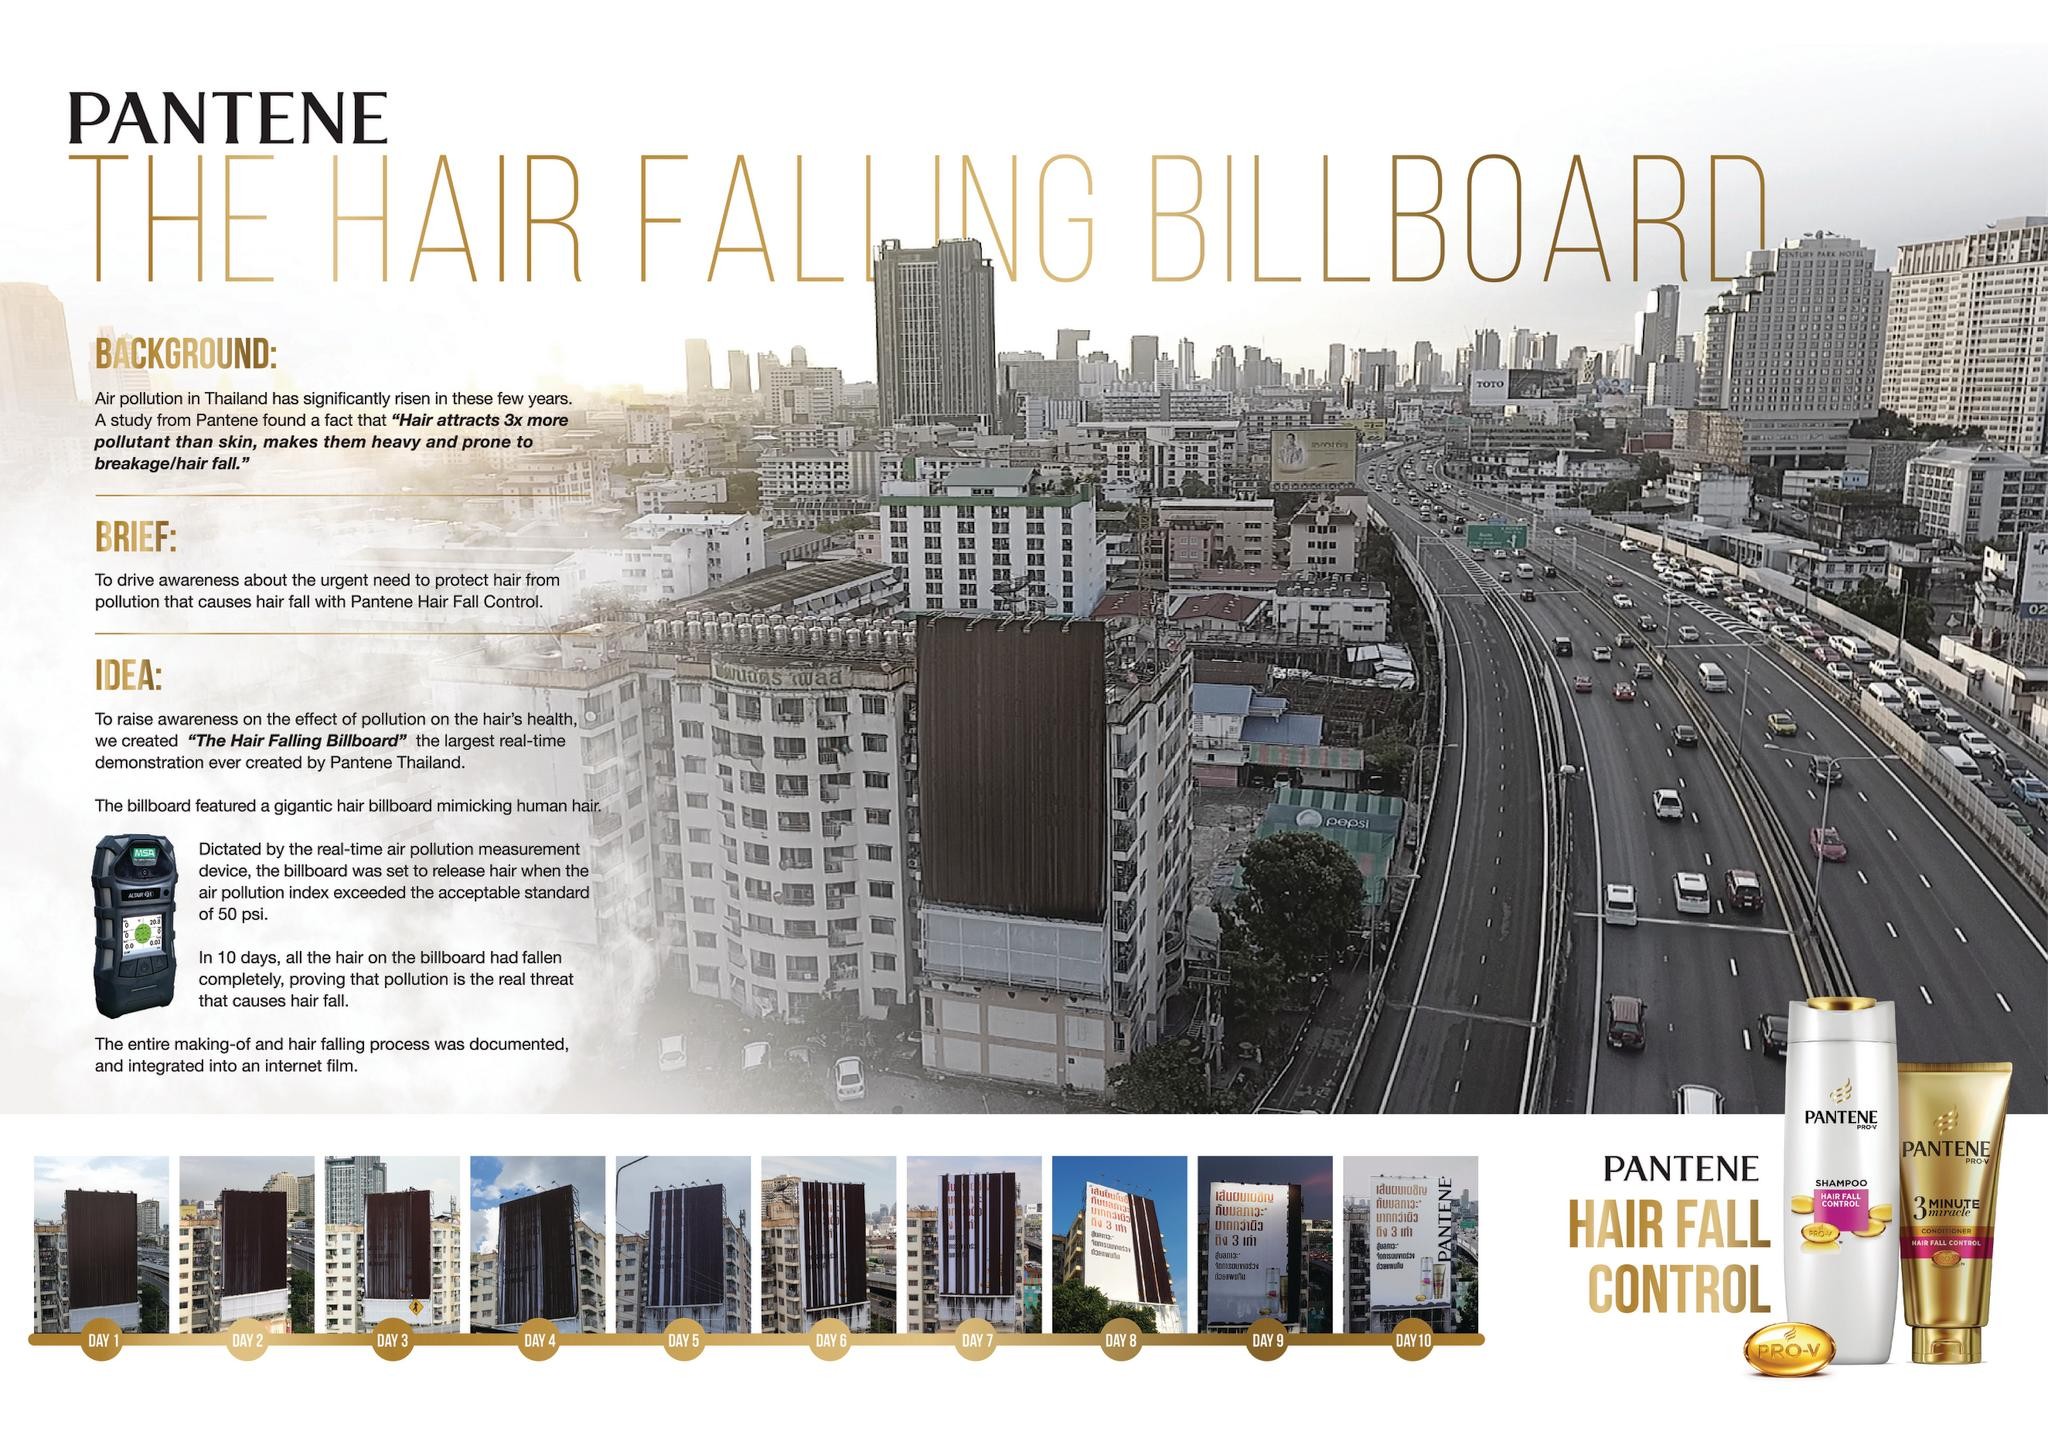 The Hair Falling Billboard